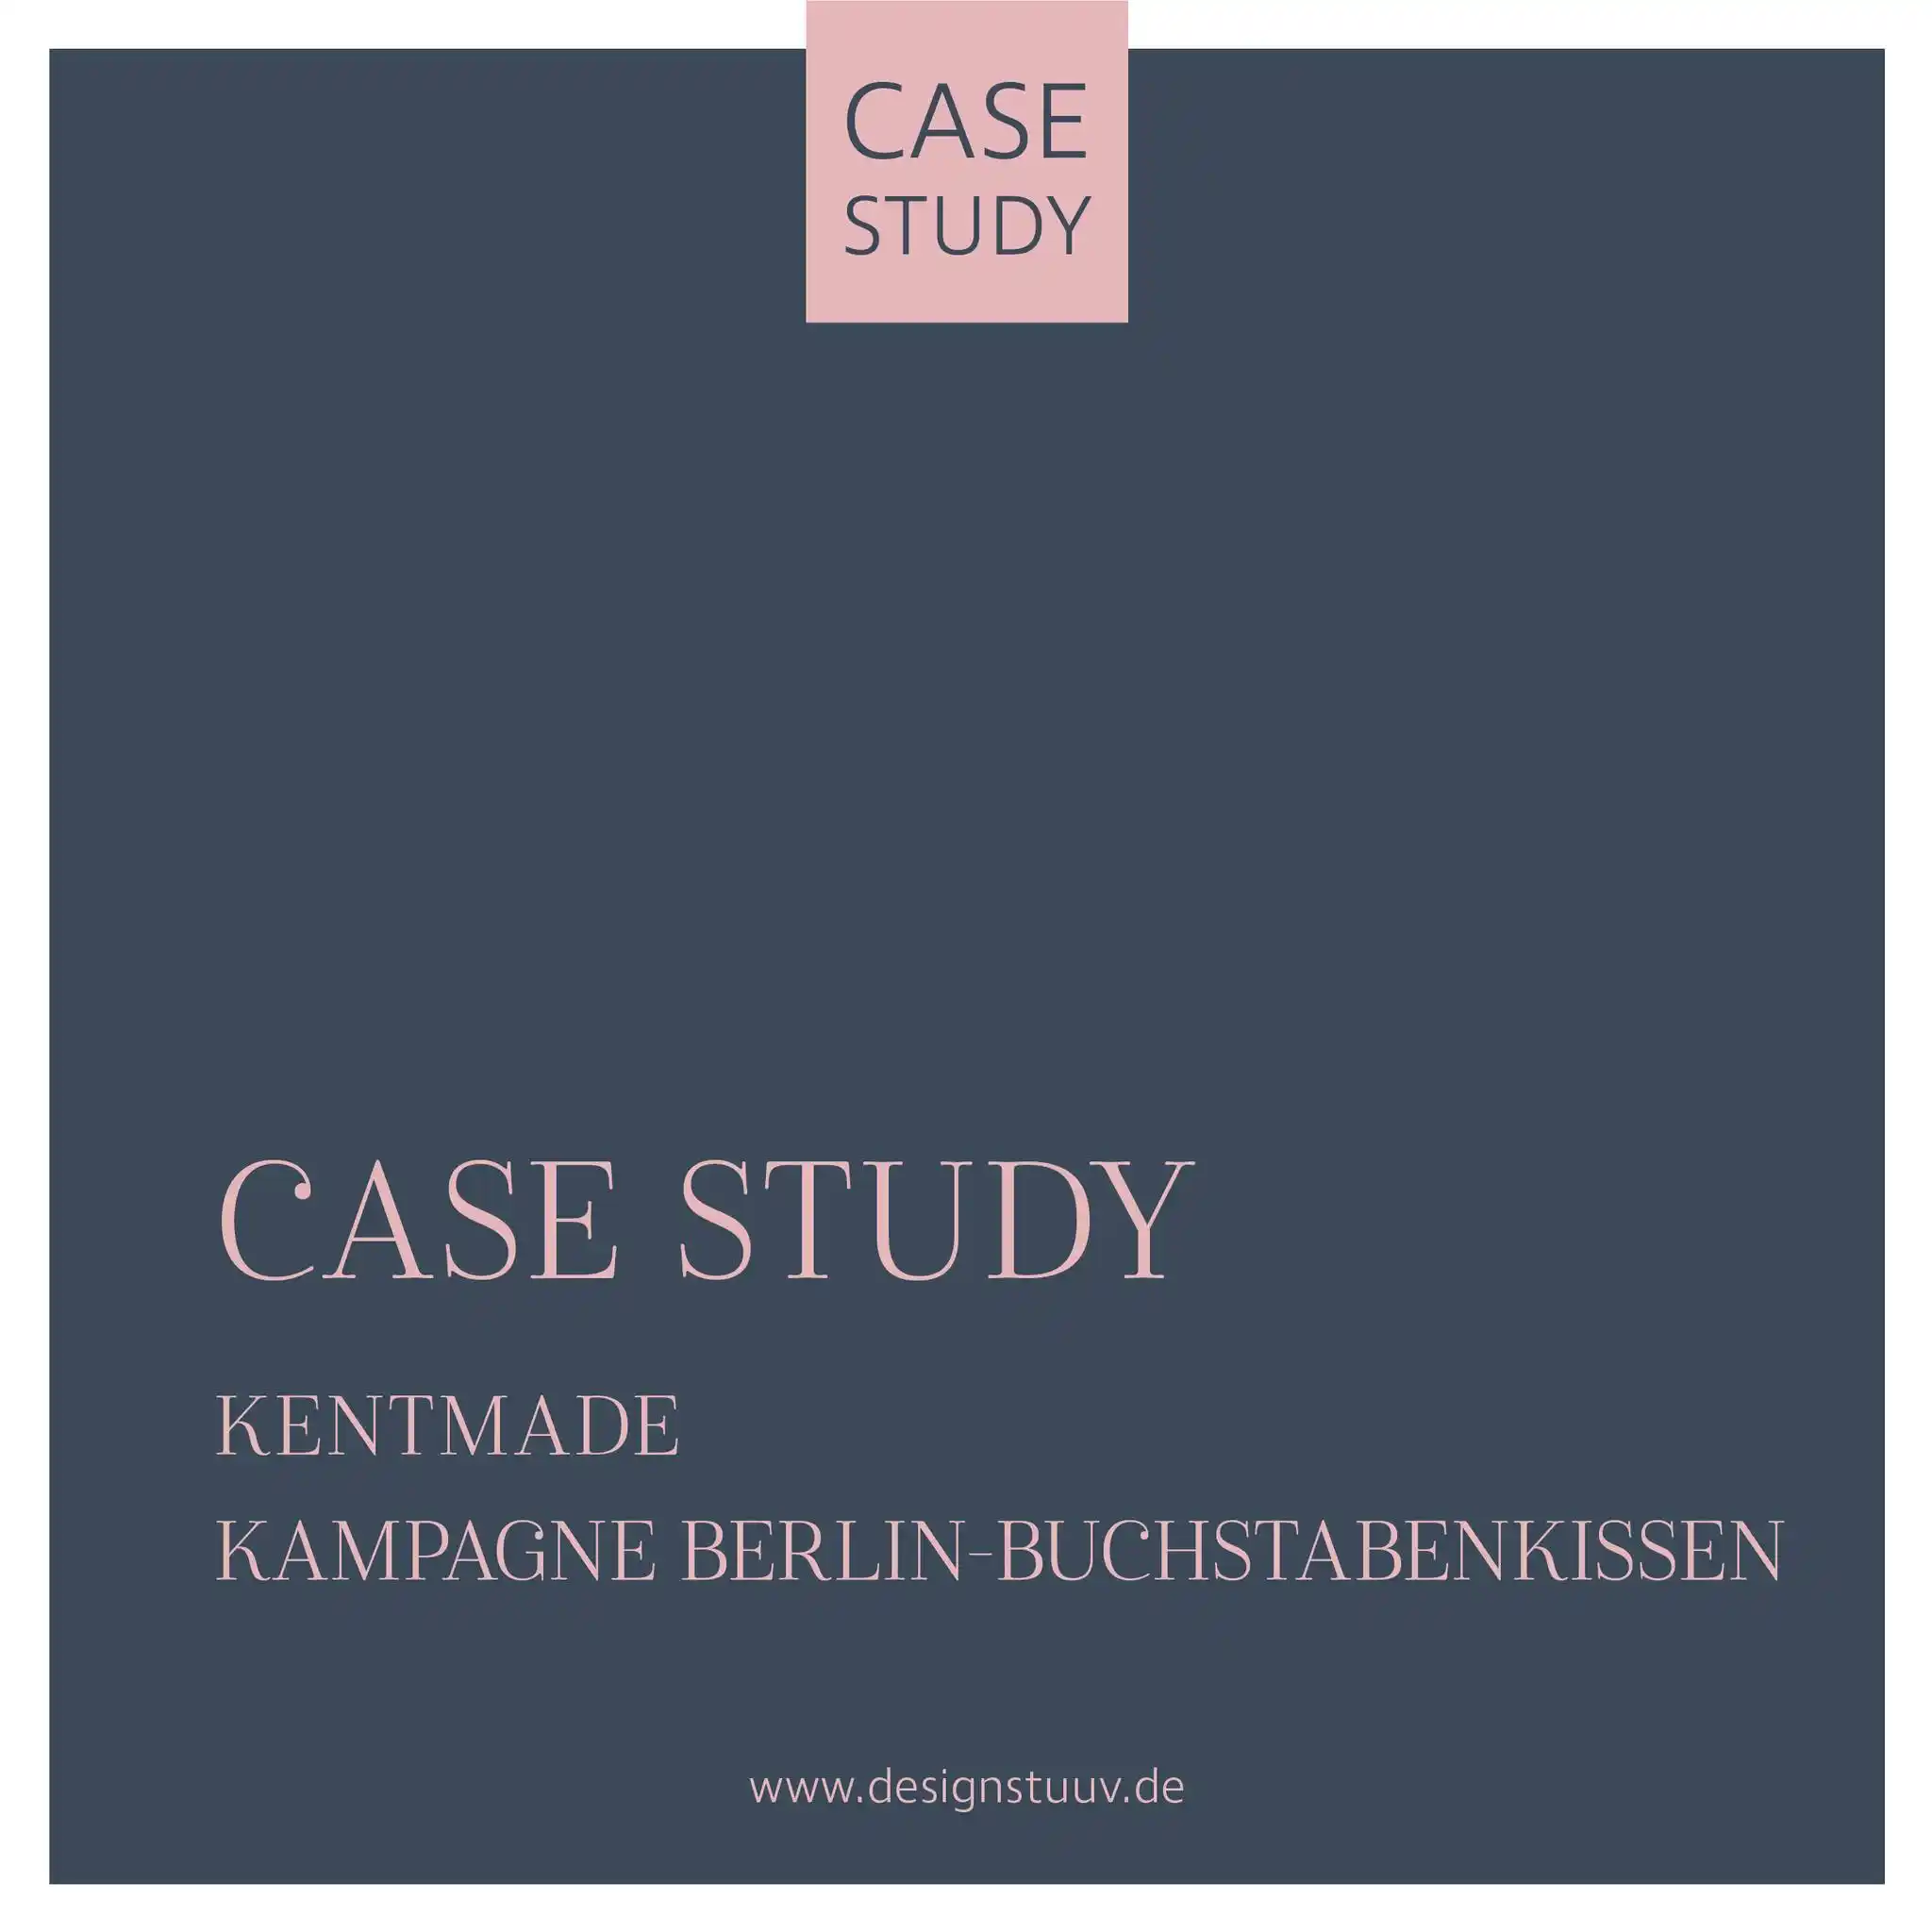 02 01 Berlinkissen KEntmade Buchstabenkissen Kampagne berlin Buchstabenkissen case Study designstuuv werbeagentur